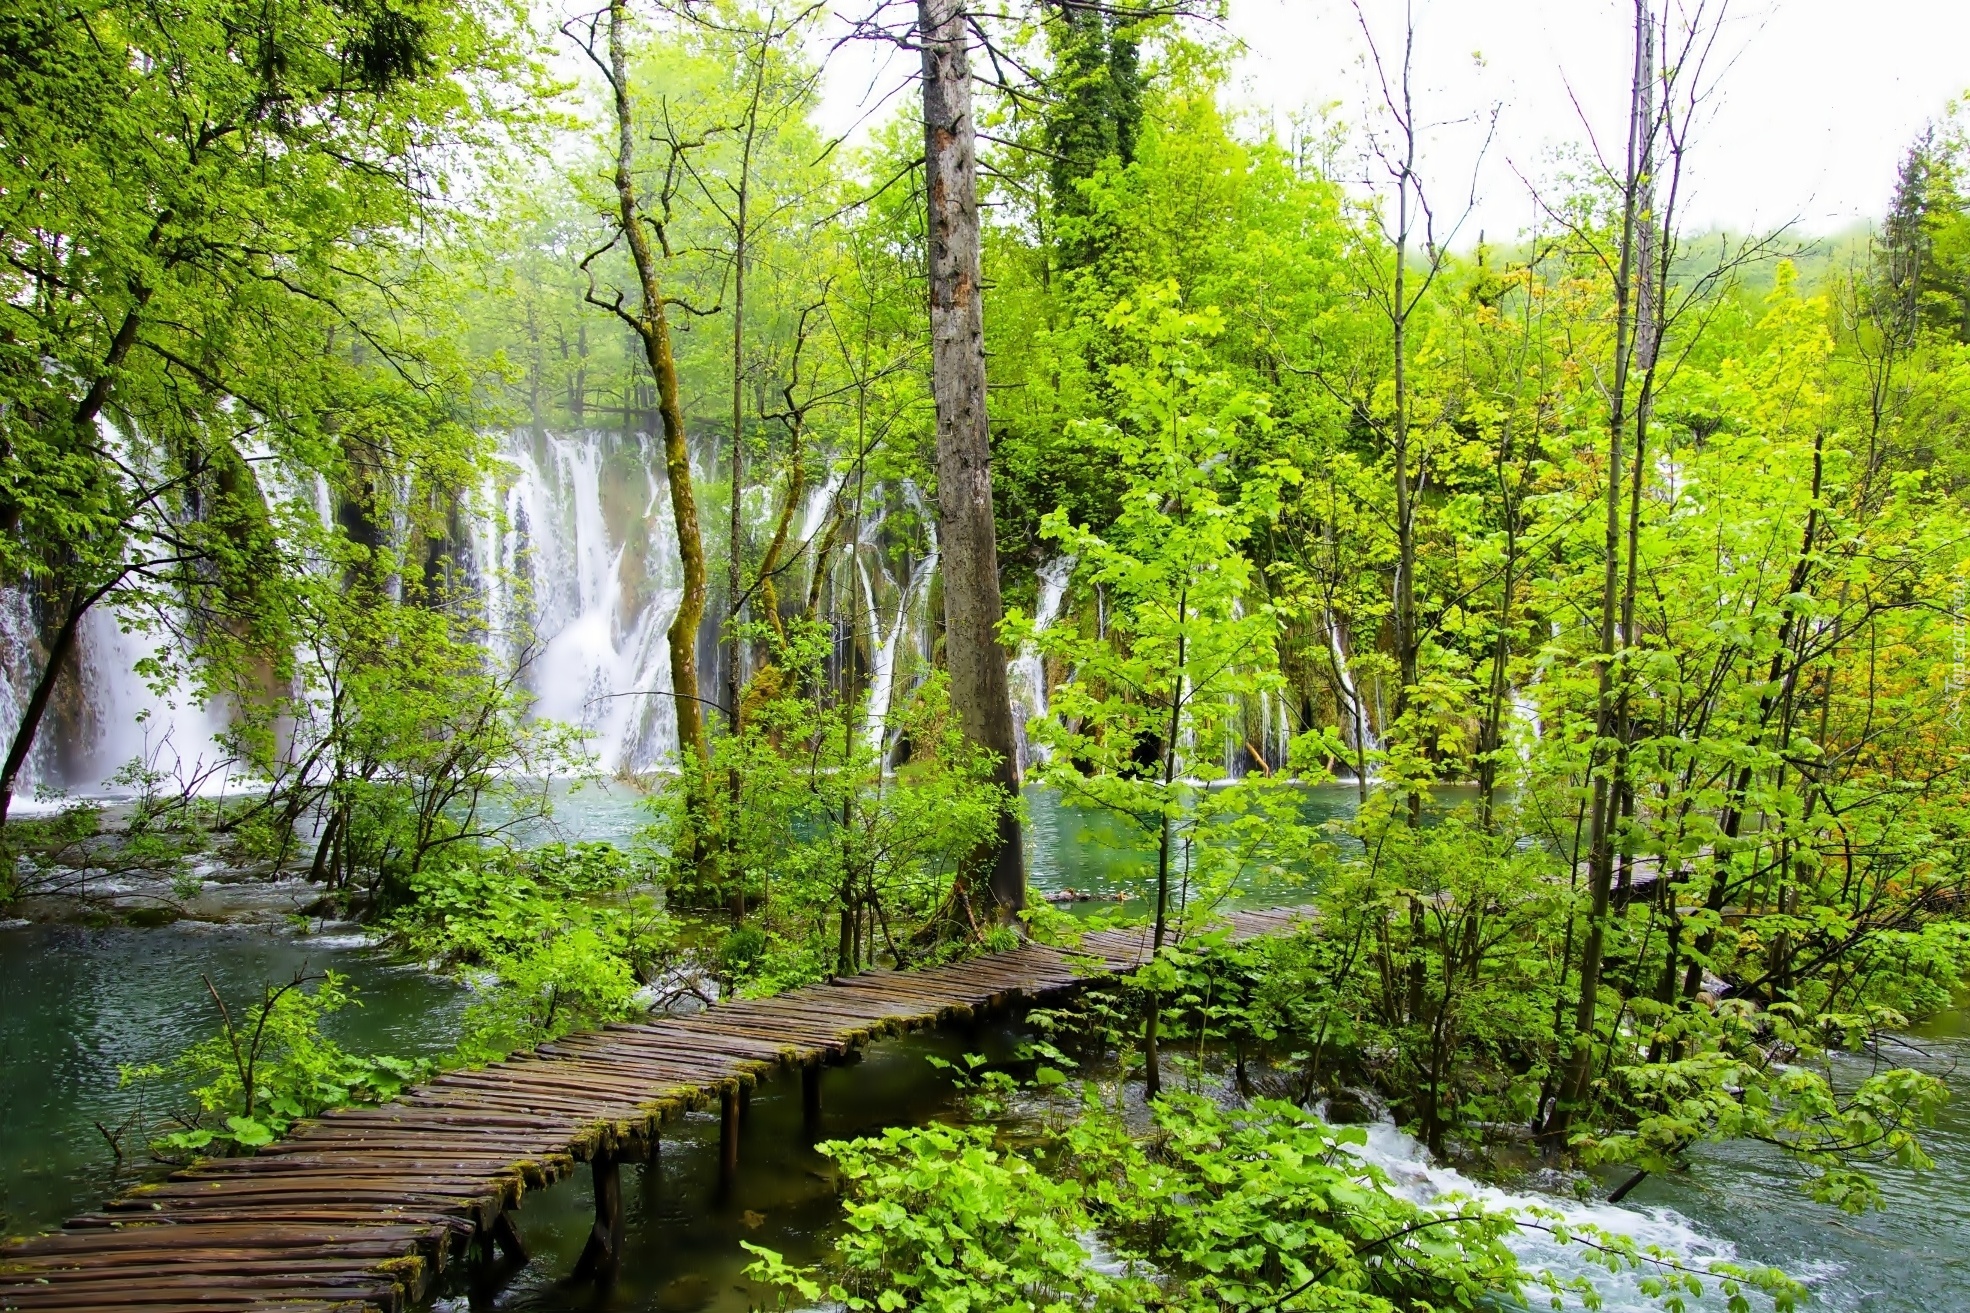 Wodospad, Las, Pomost, Plitvice, Chorwacja